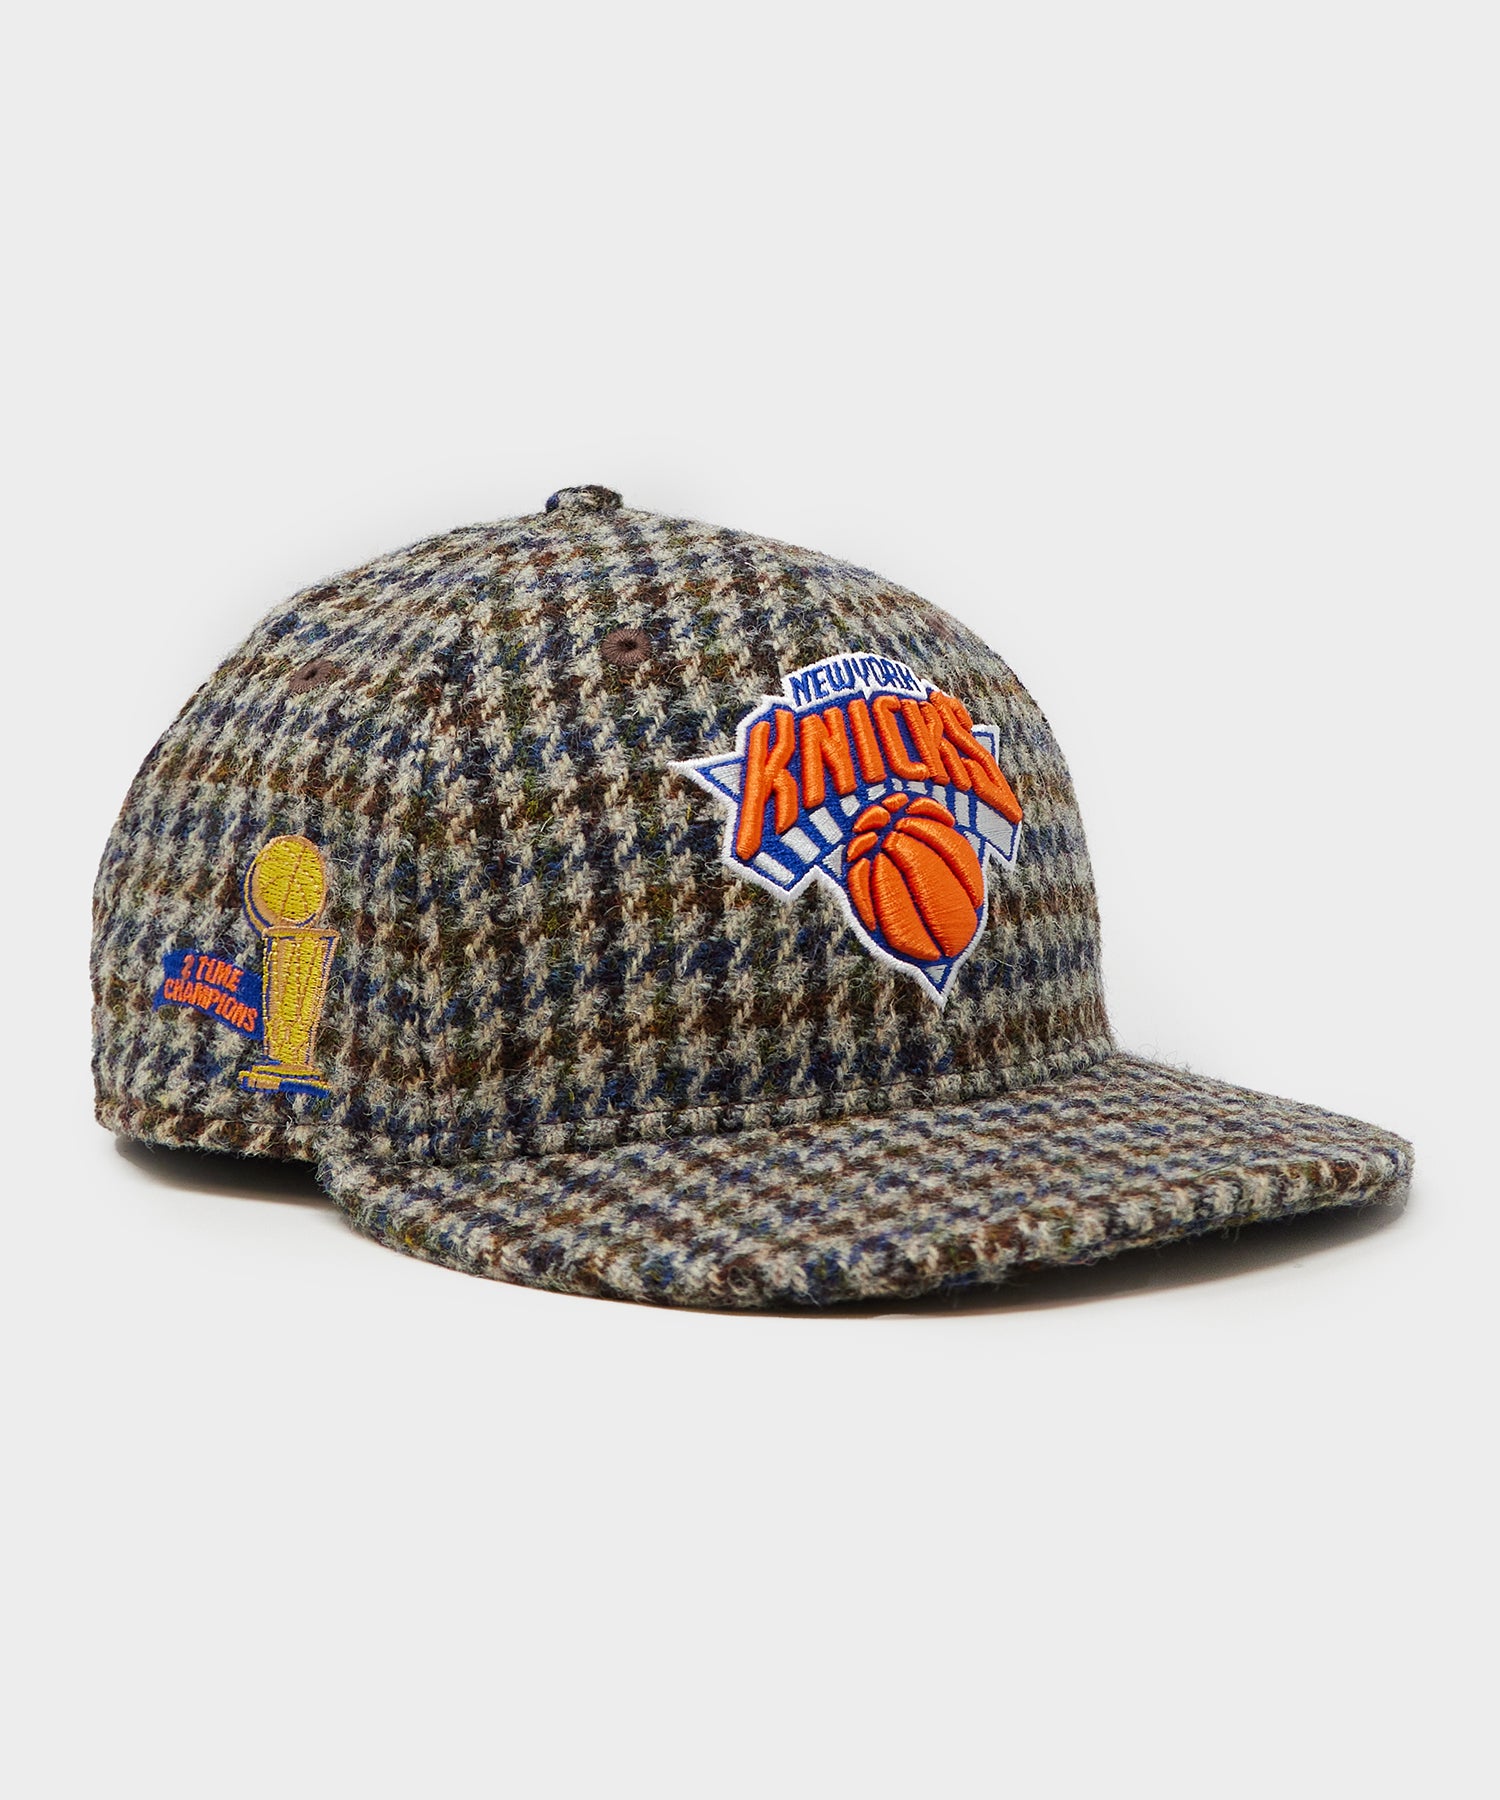 Knicks  Nike x NBA concept : r/NYKnicks